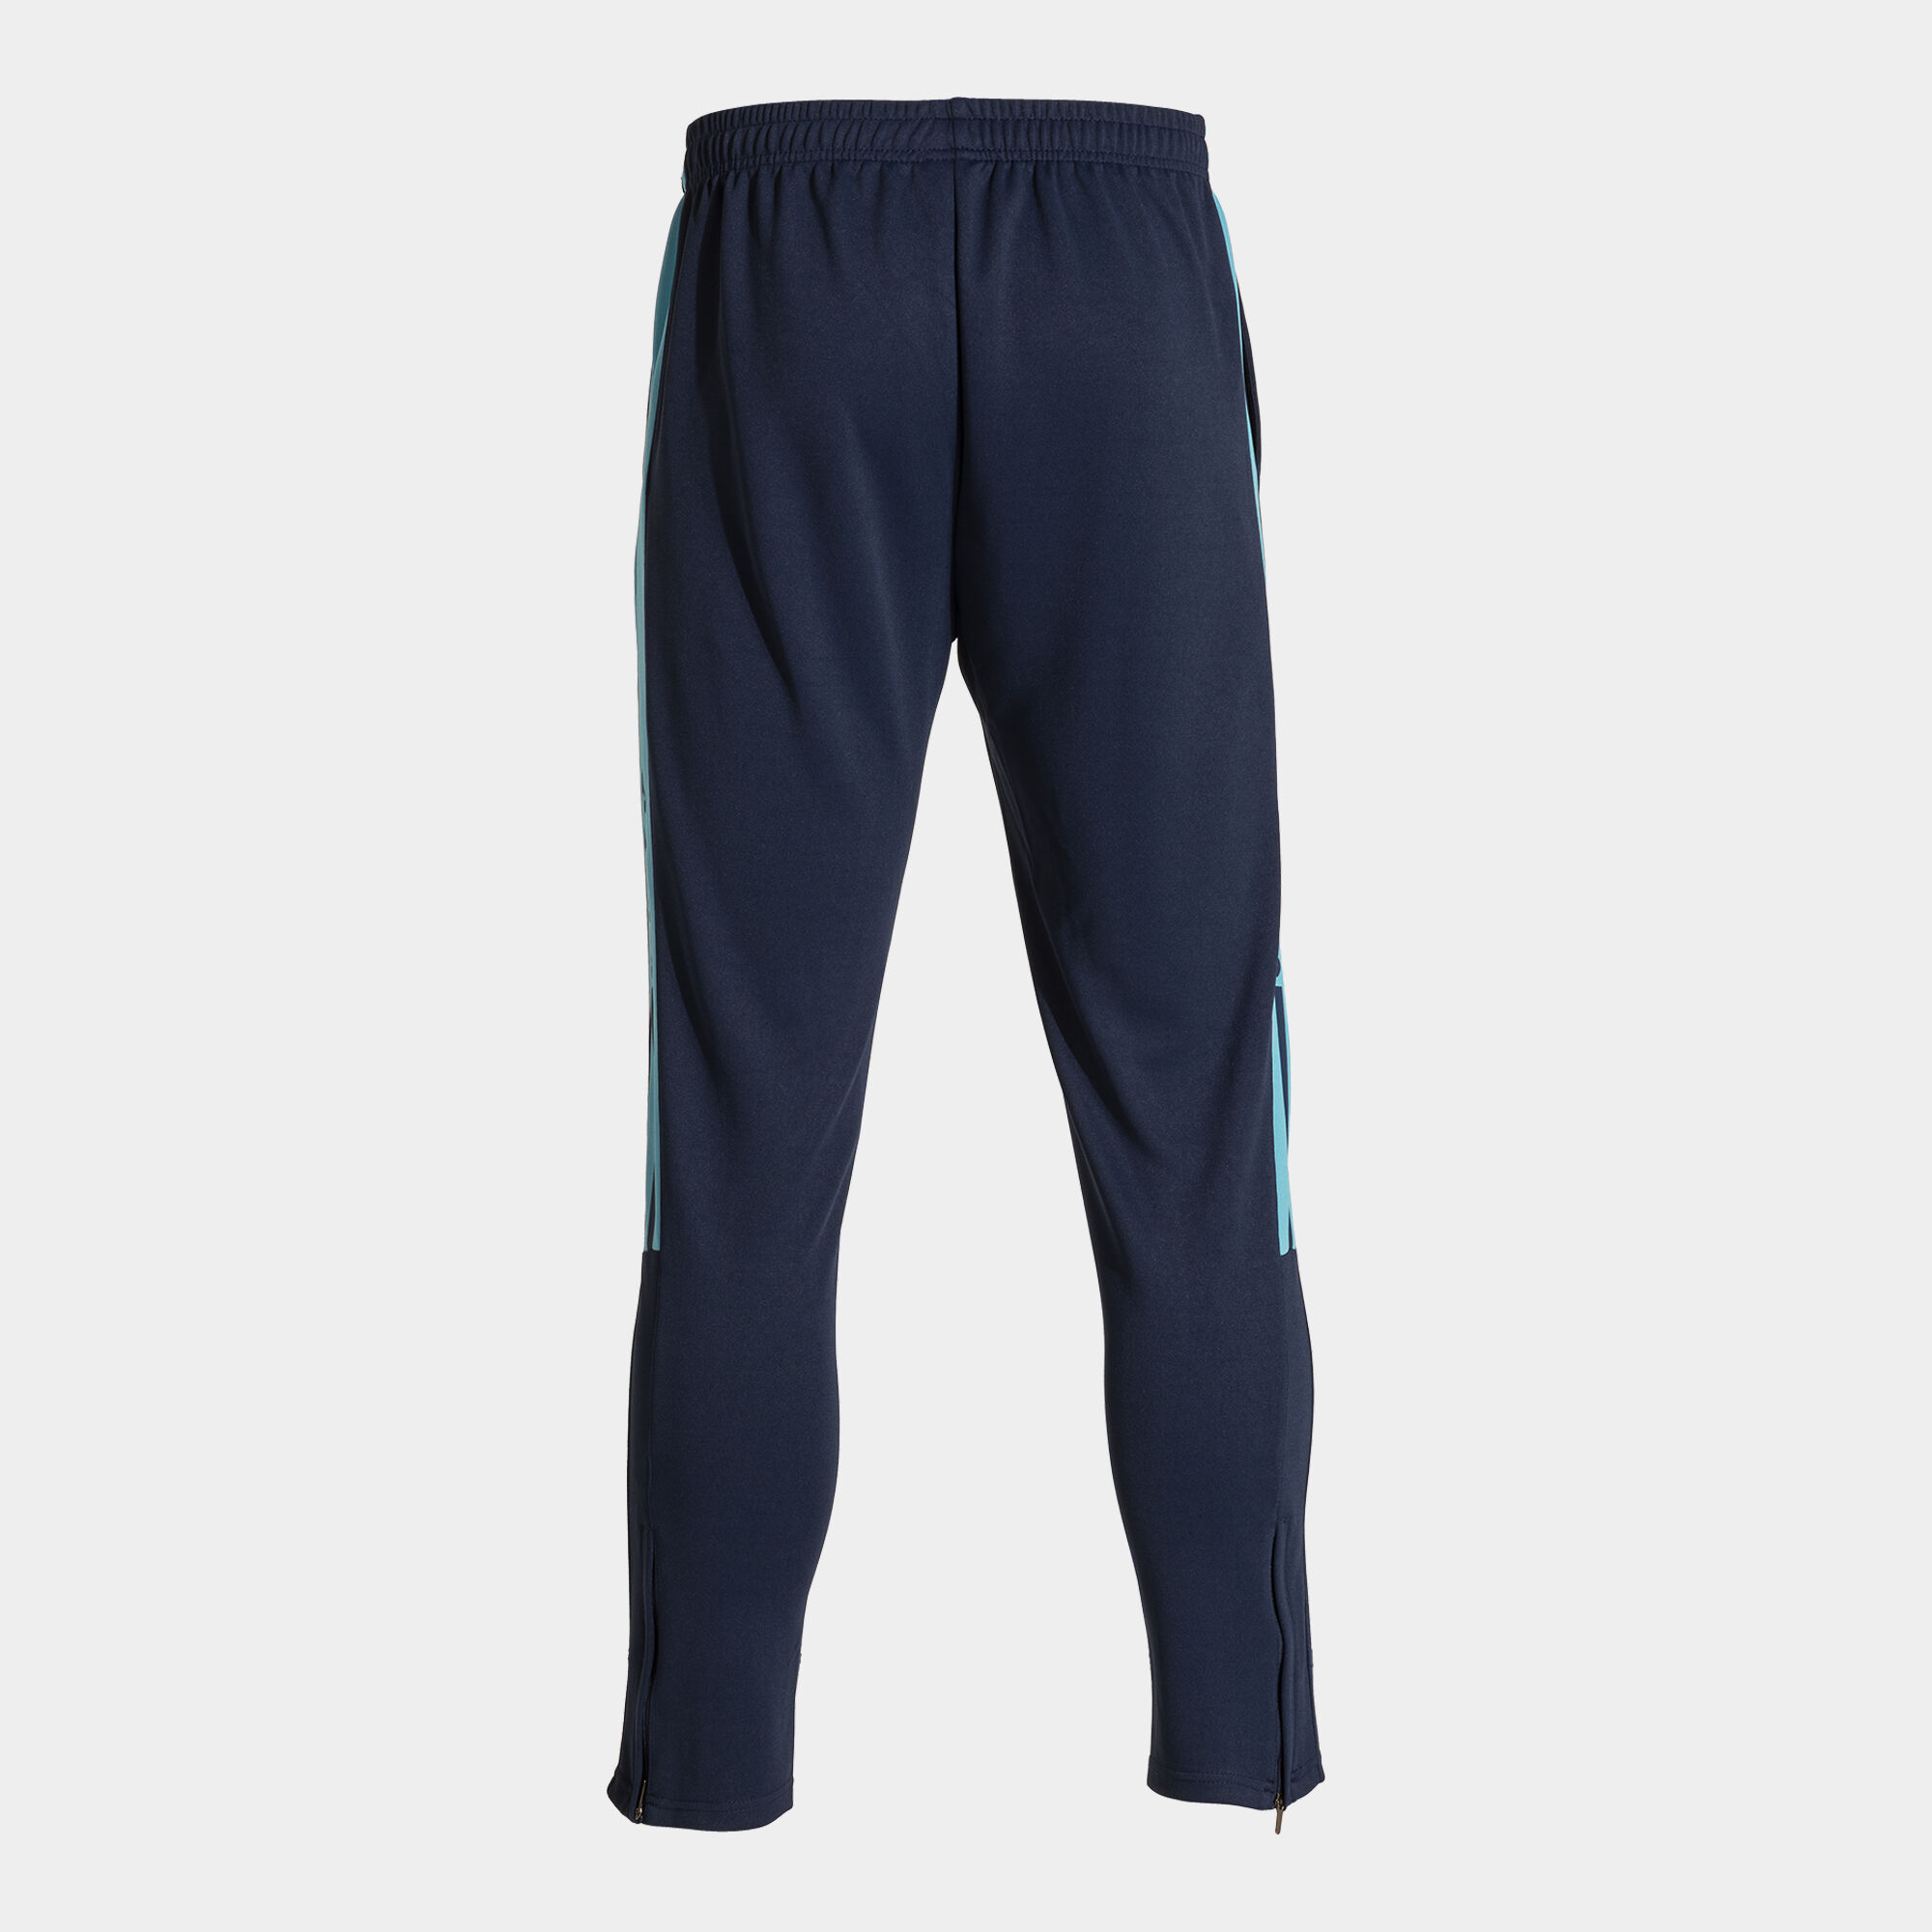 Pantalone lungo uomo Olimpiada blu navy turchese fluorescente